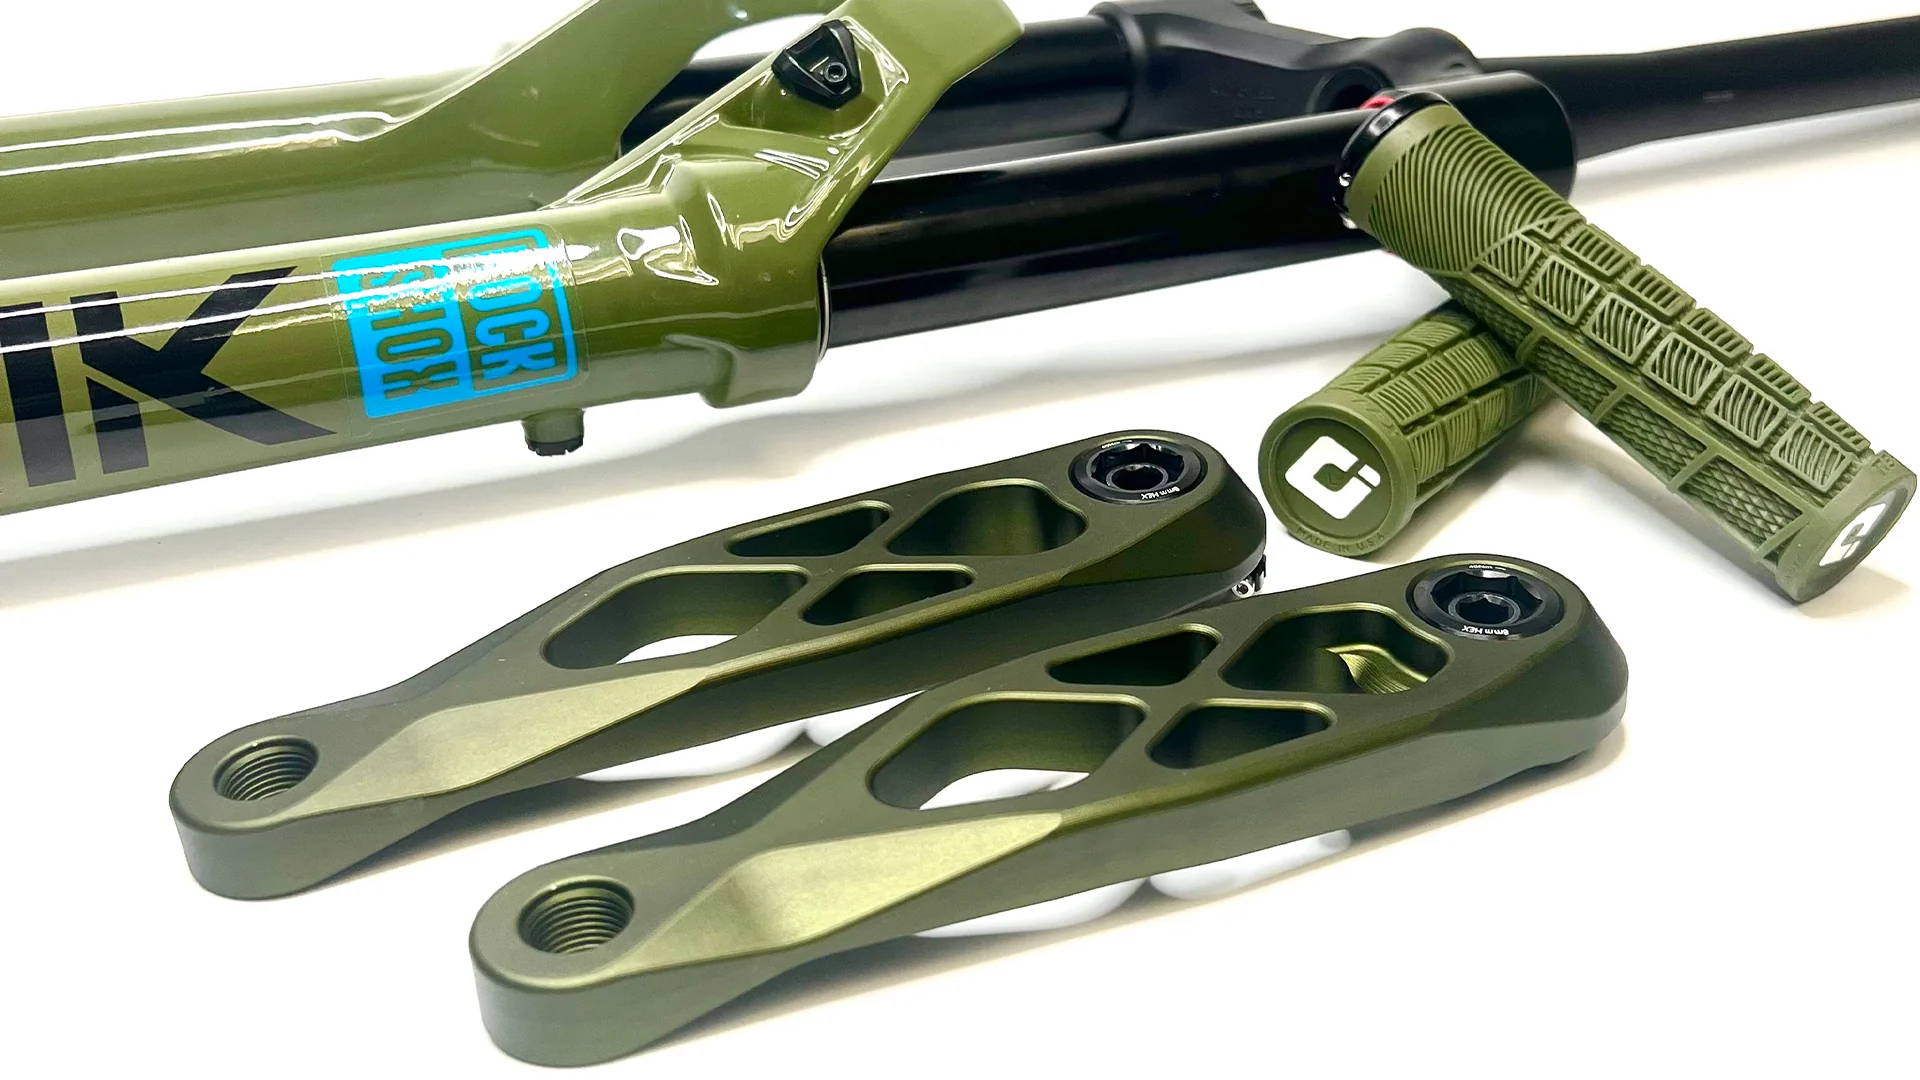 Green 5DEV aluminum crank arms next to a RockShox Lyrik and green ODI grips